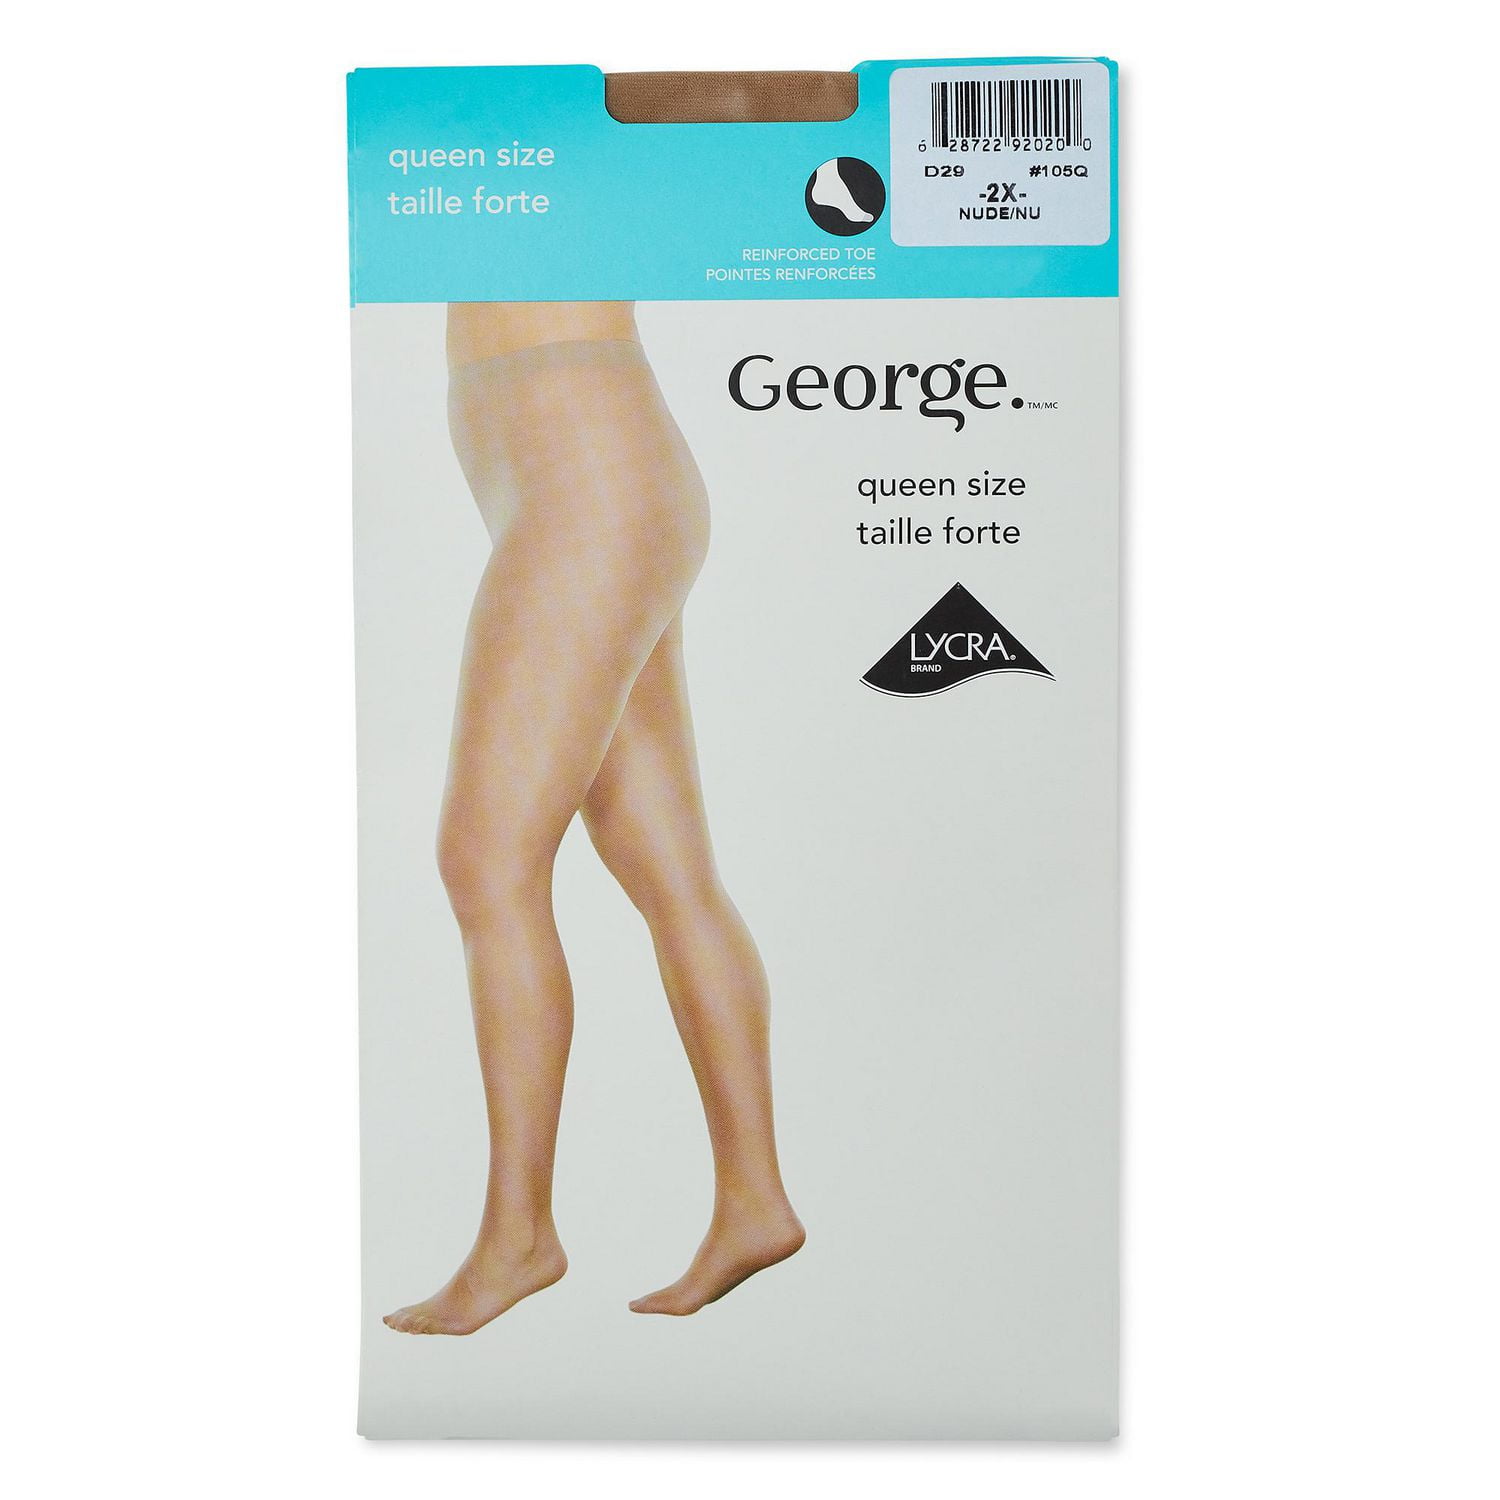 George Plus Women's Queen Size Pantyhose, Sizes 2X-4X 